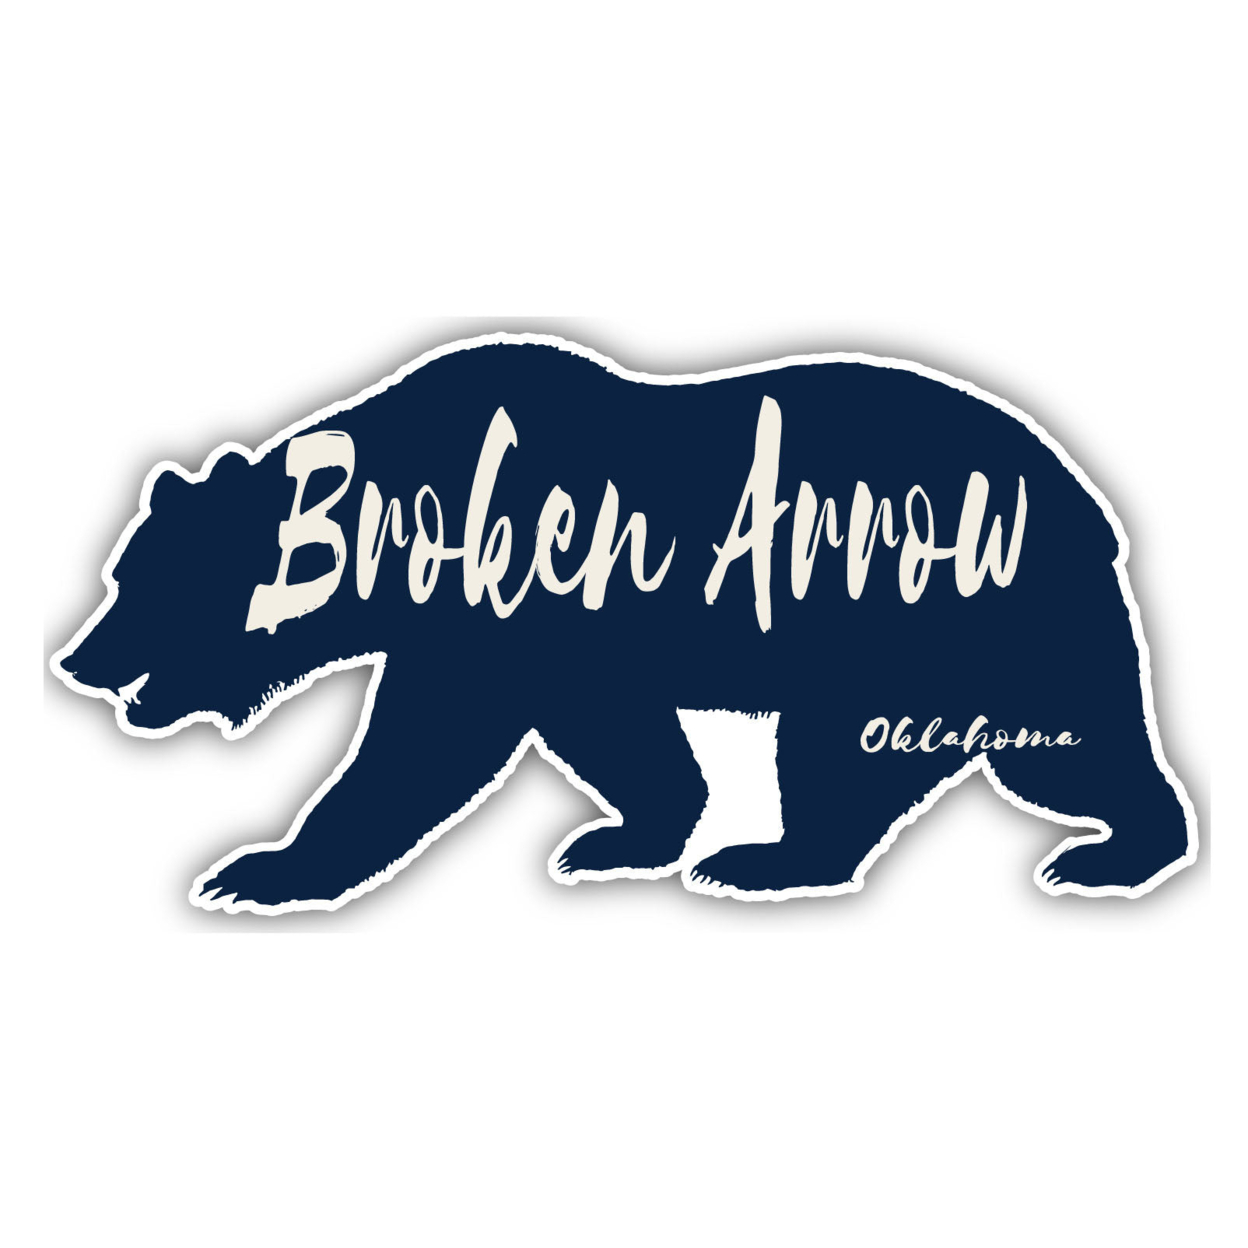 Broken Arrow Oklahoma Souvenir Decorative Stickers (Choose Theme And Size) - Single Unit, 6-Inch, Great Outdoors